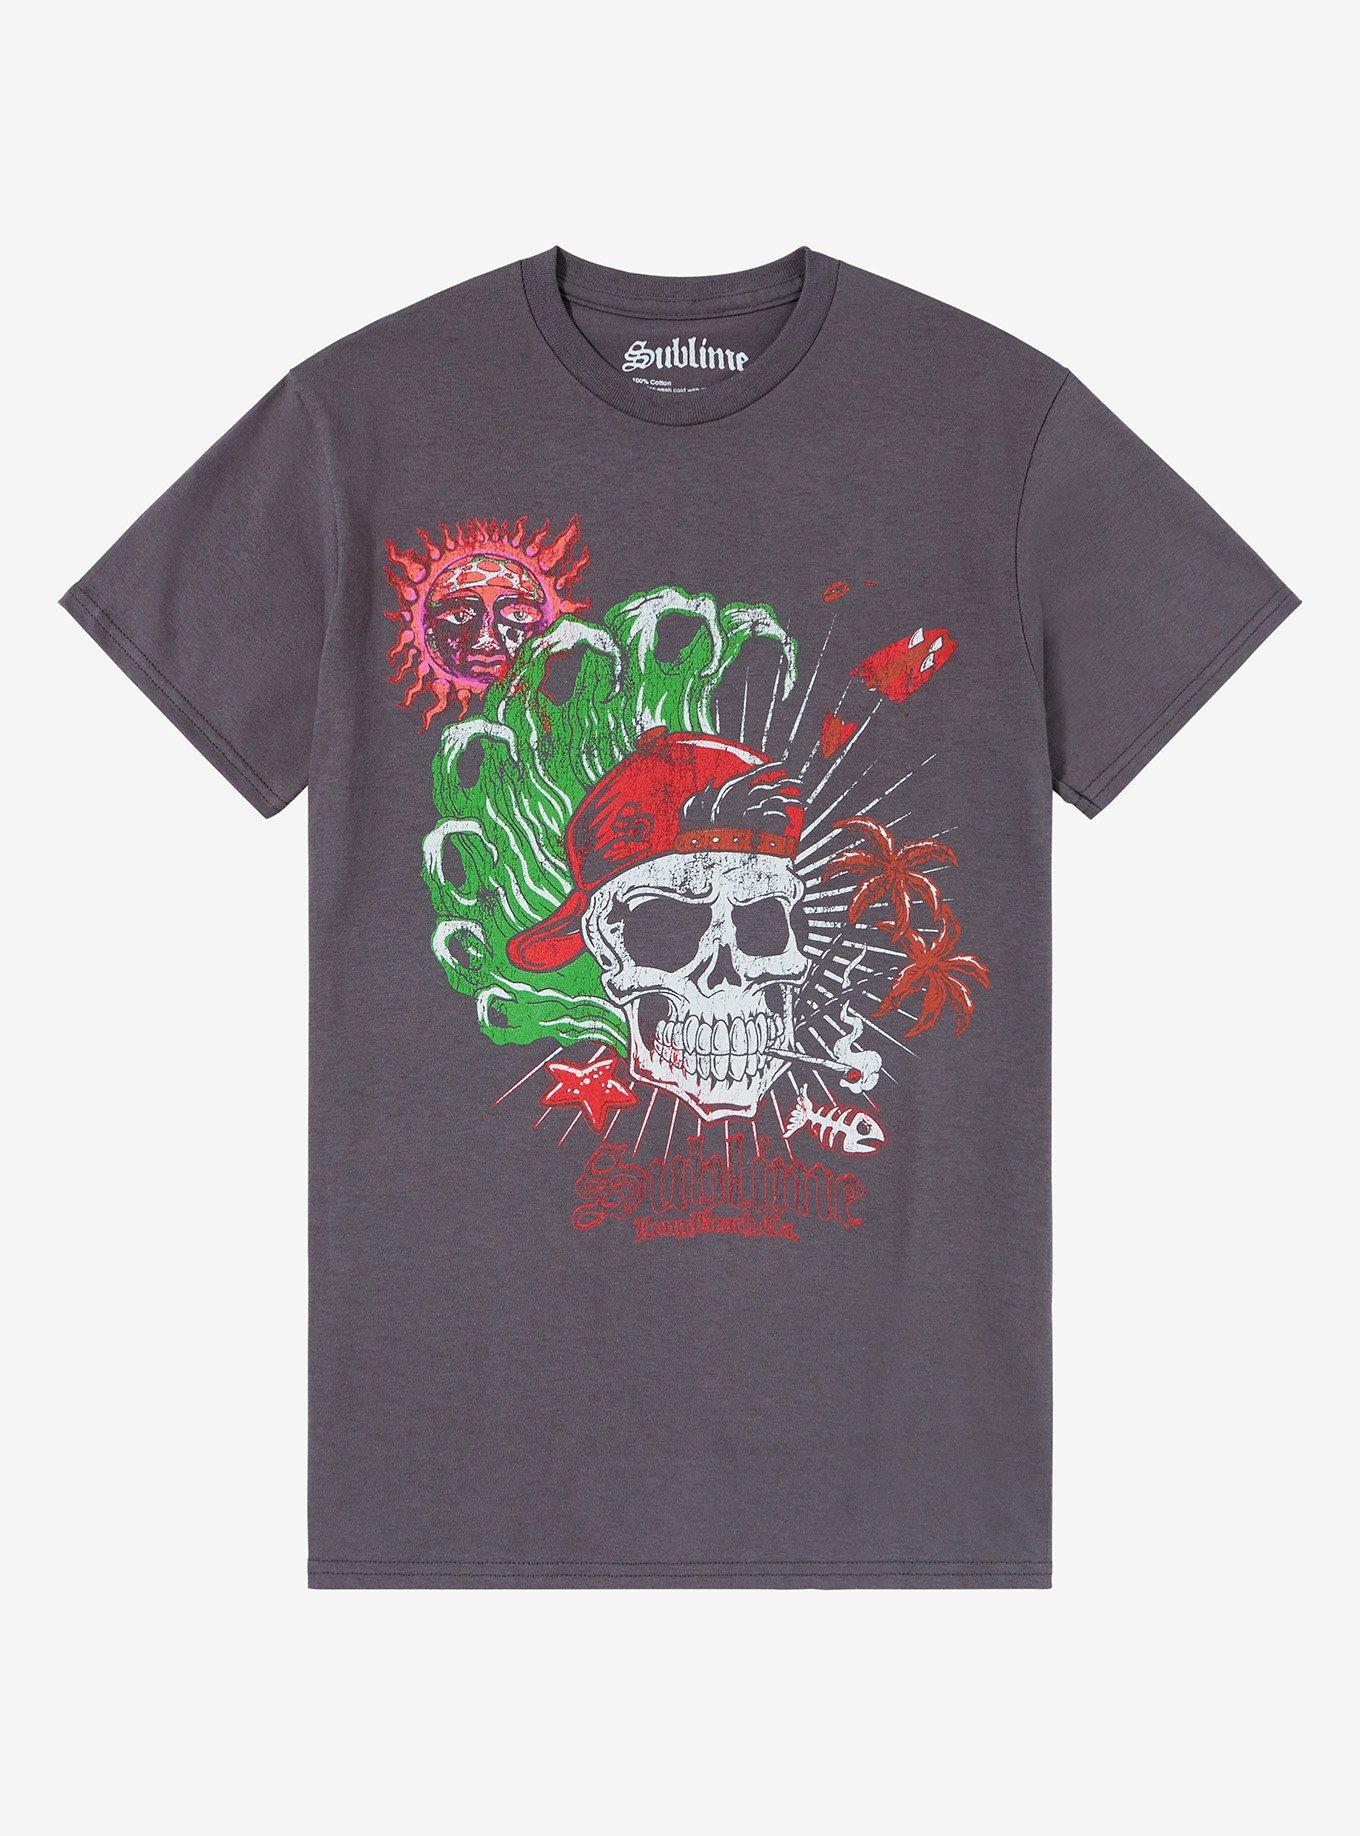 Sublime Smoking Skull Boyfriend Fit Girls T-Shirt, CHARCOAL, hi-res